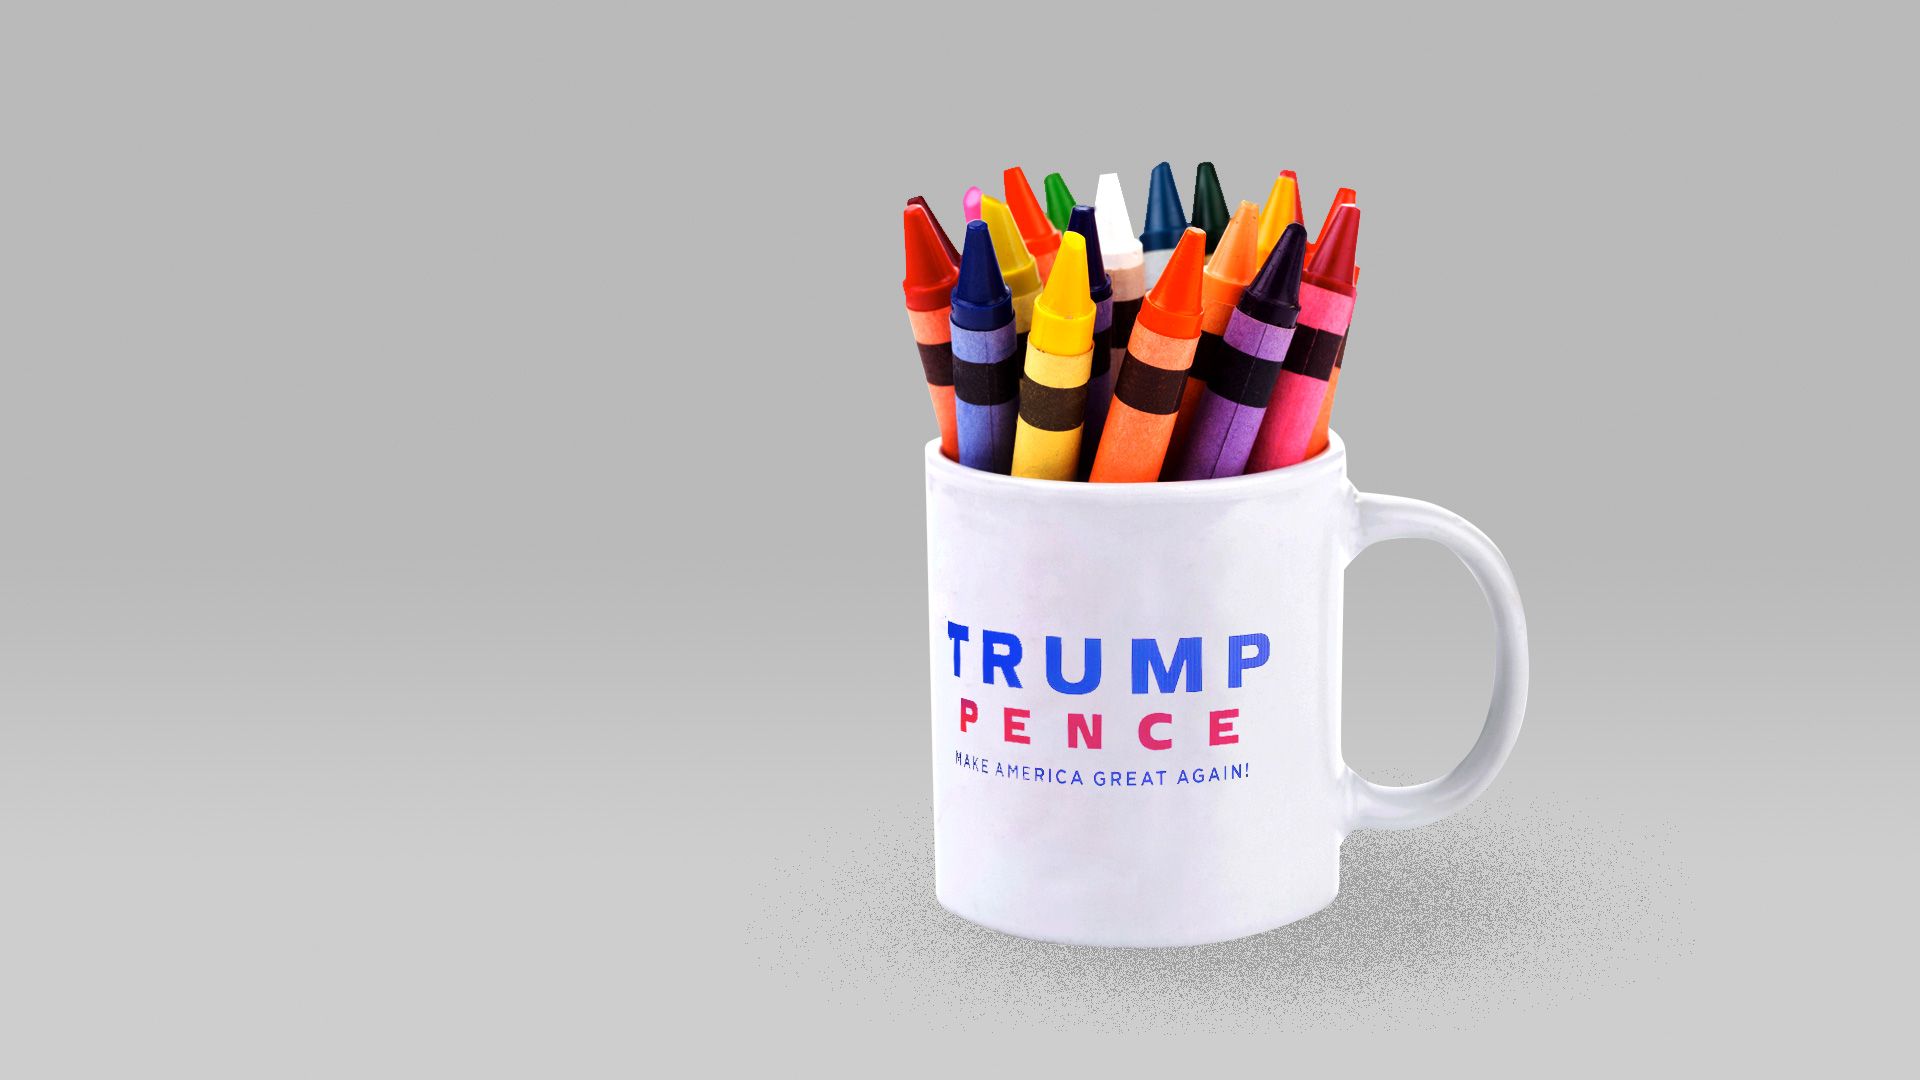 A coffee mug with the Trump/Pence logo holding crayons